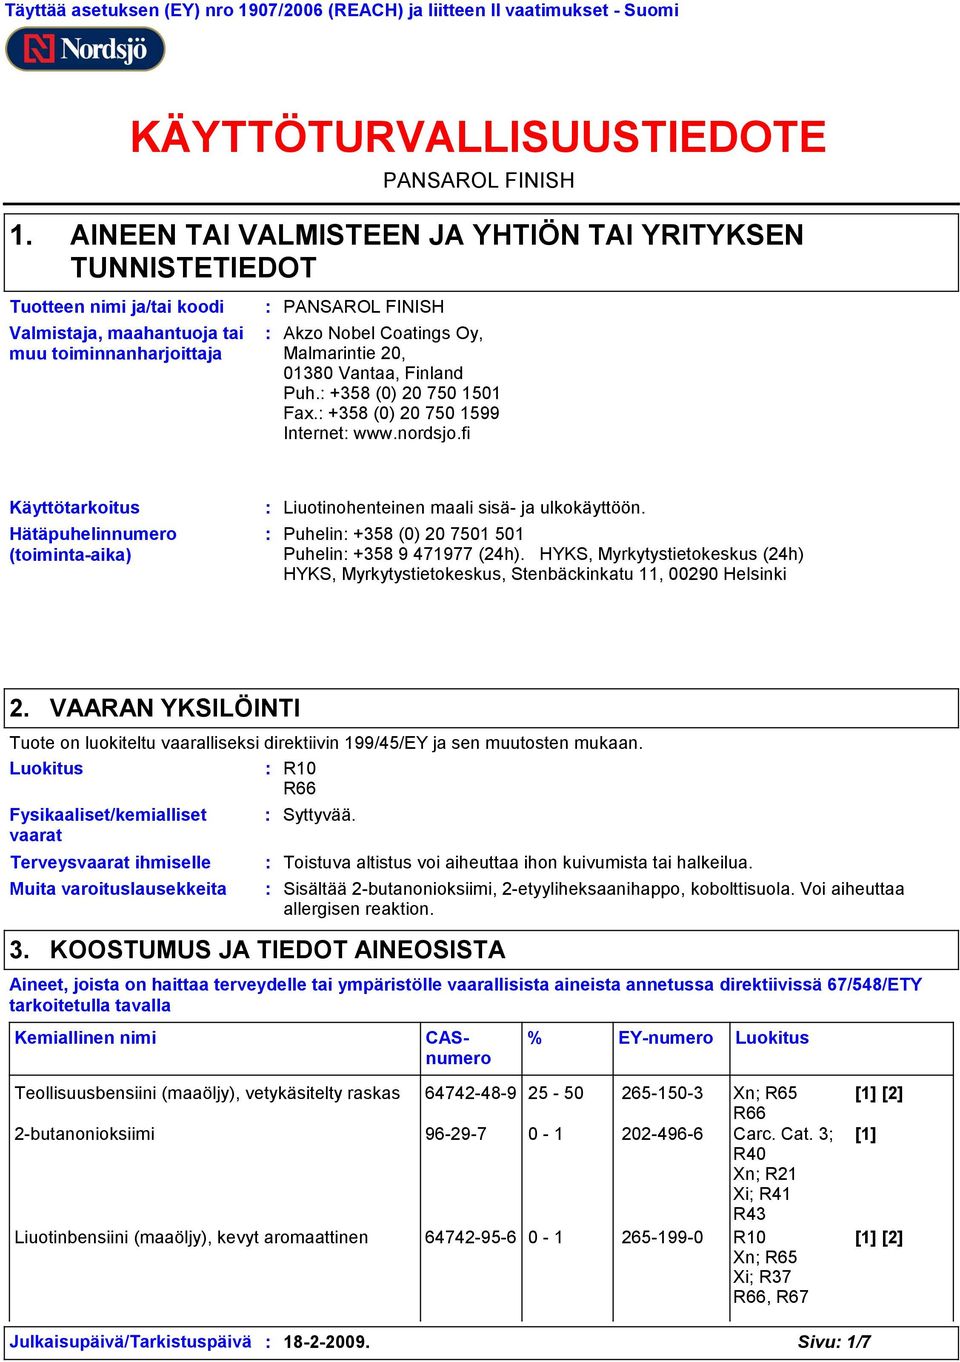 Akzo Nobel Coatings Oy, Malmarintie 20, 0180 Vantaa, Finland Puh. +58 (0) 20 750 1501 Fax. +58 (0) 20 750 1599 Internet www.nordsjo.